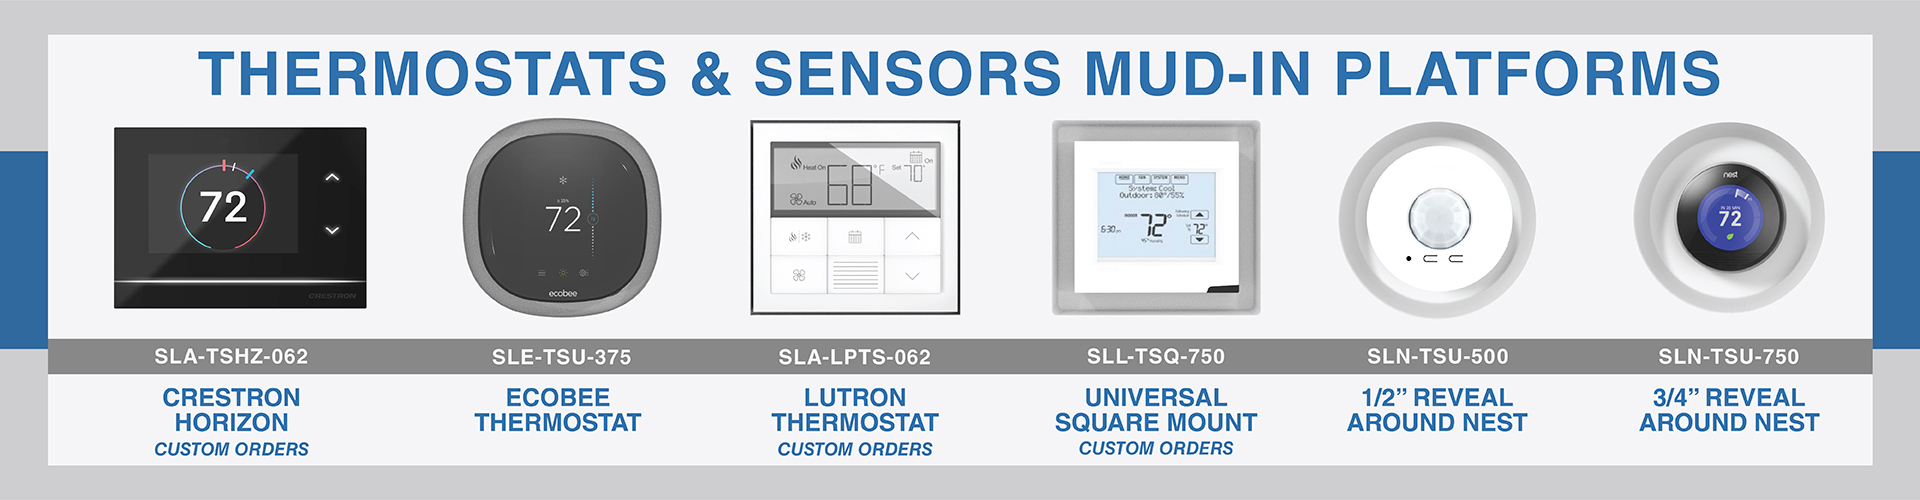 Thermostats & Sensors Mud-In Platforms